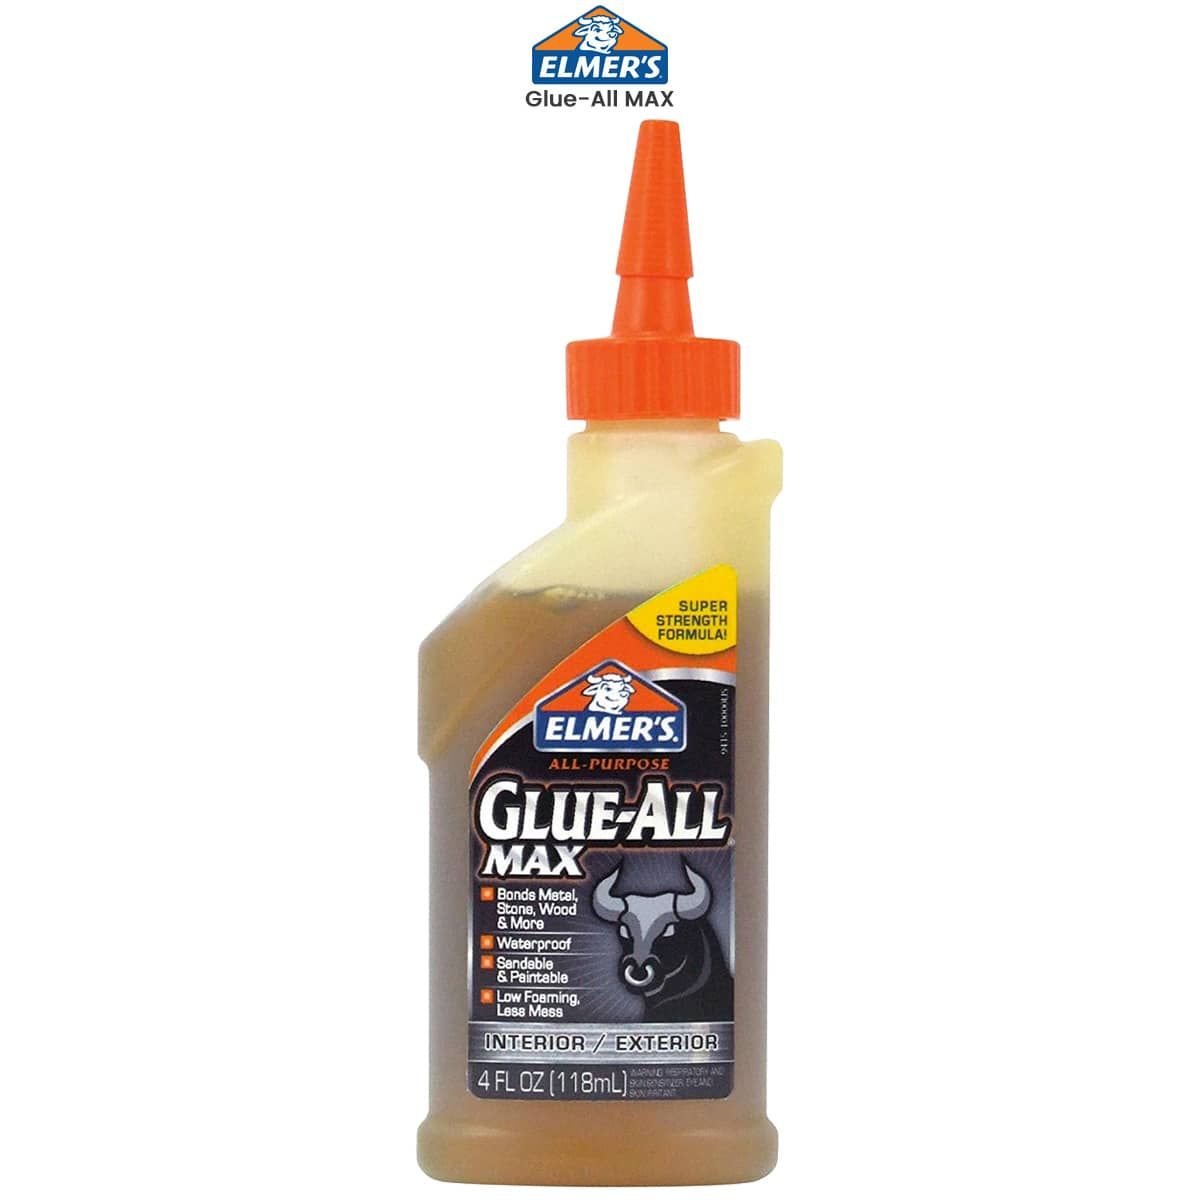 How To Use Elmer's Glue 